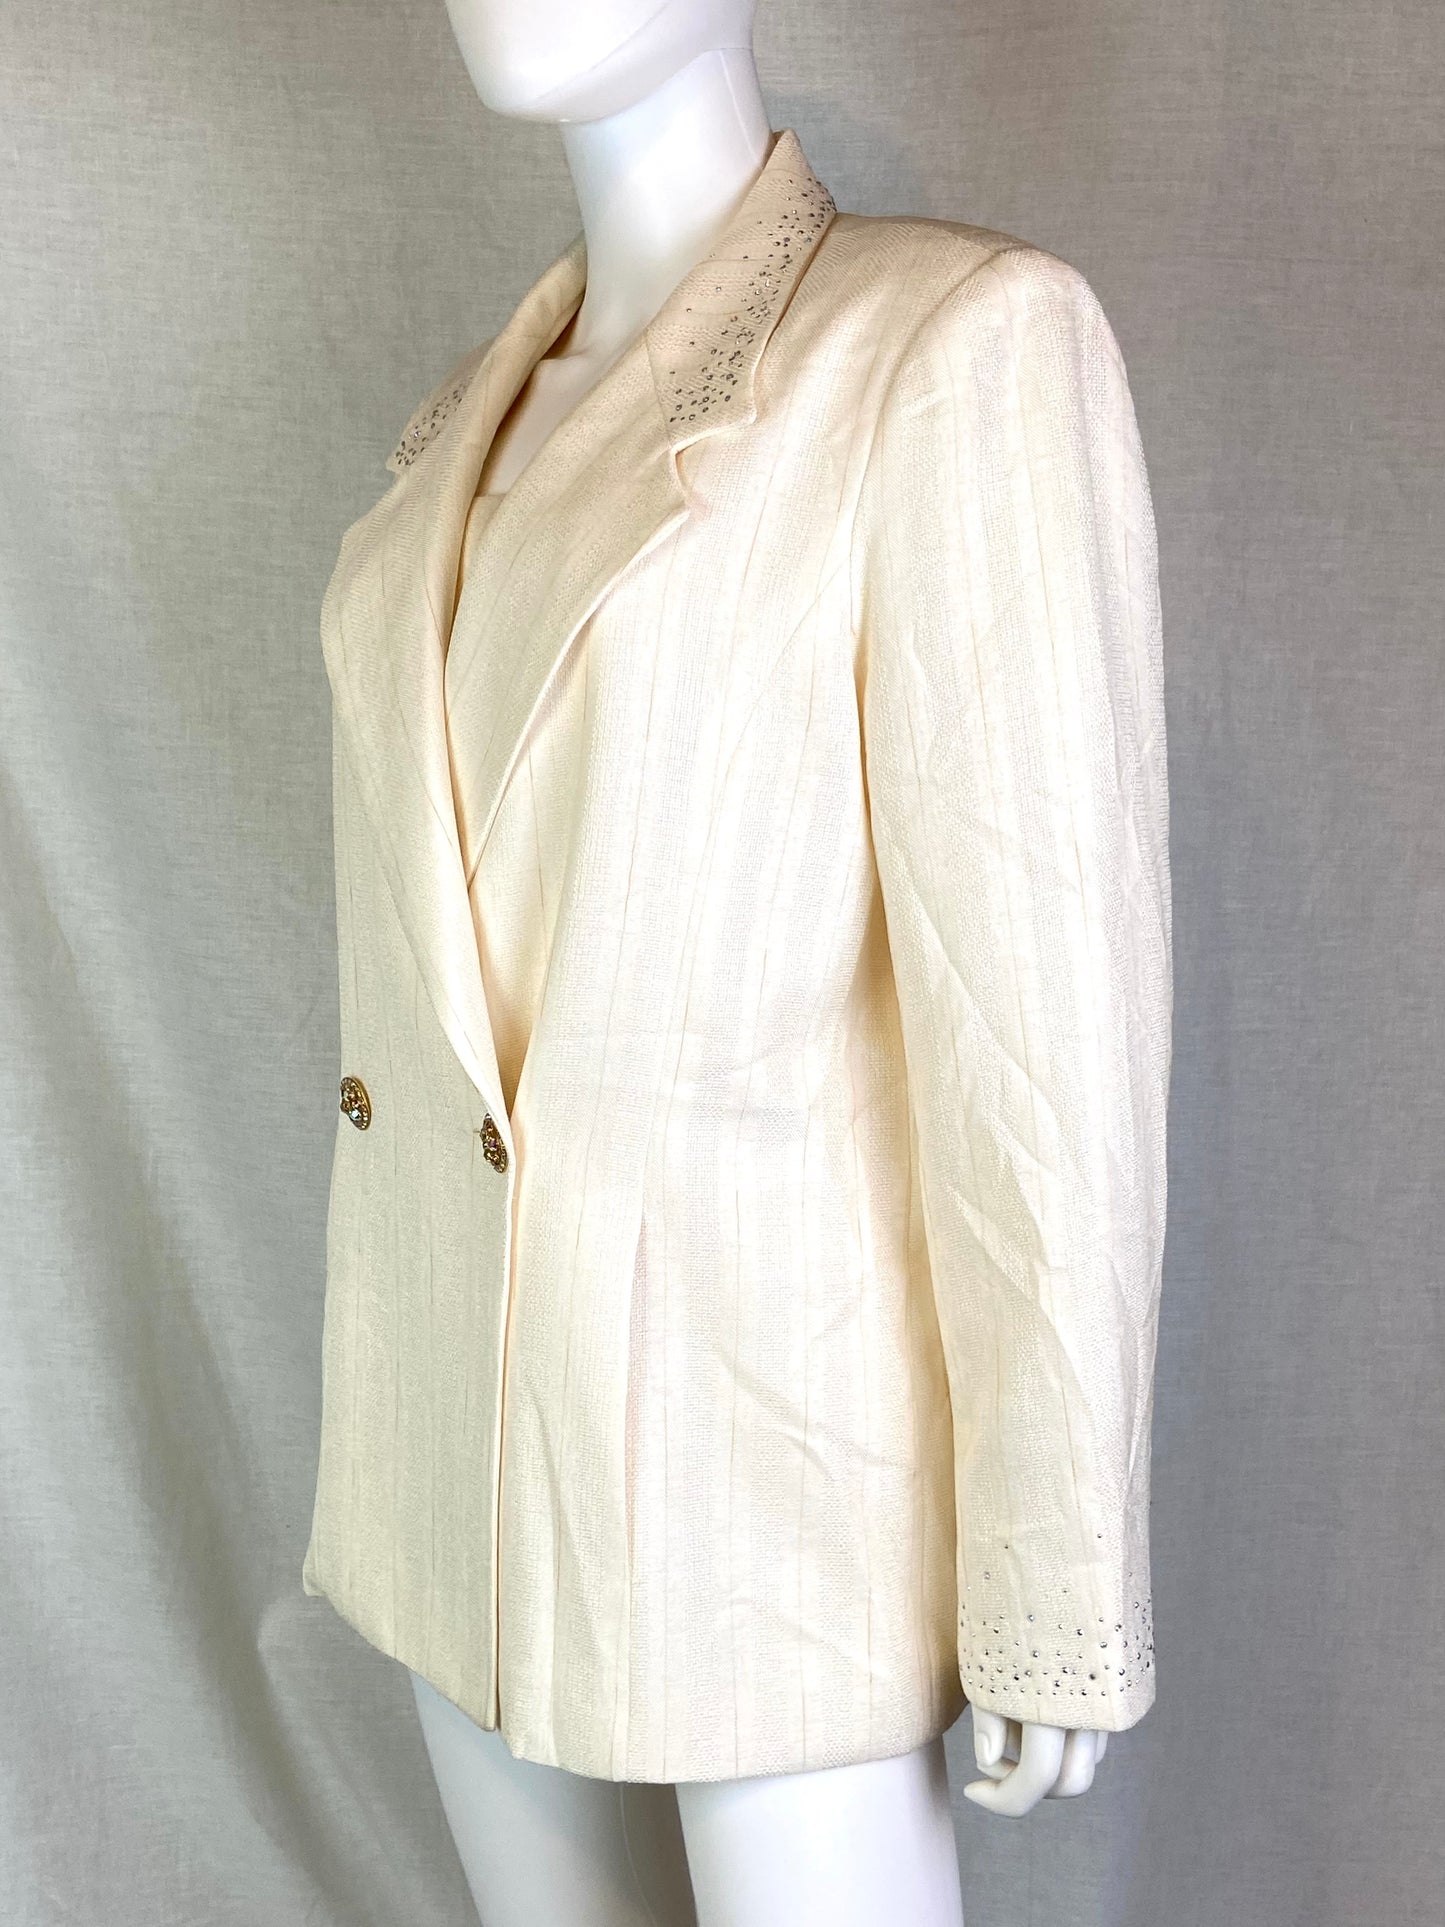 Lily & Taylor Cream White Striped Rhinestone Blazer Jacket